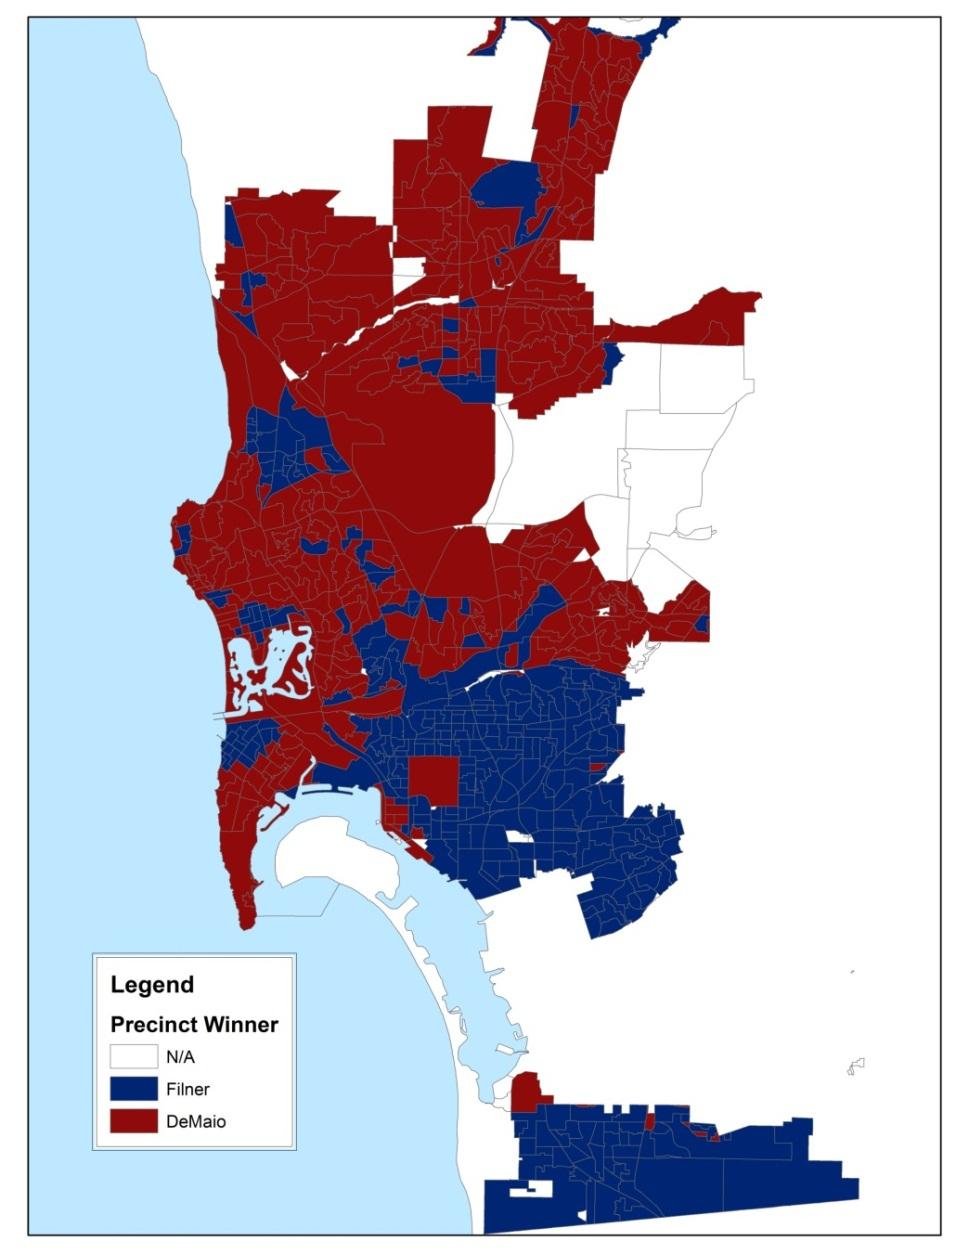 Mayoral Election On November 6, 2012, San Diego Congressman Bob Filner defeated Councilman Carl DeMaio in the mayoral election; the vote margin was 52.49% to 47.51%, respectively.